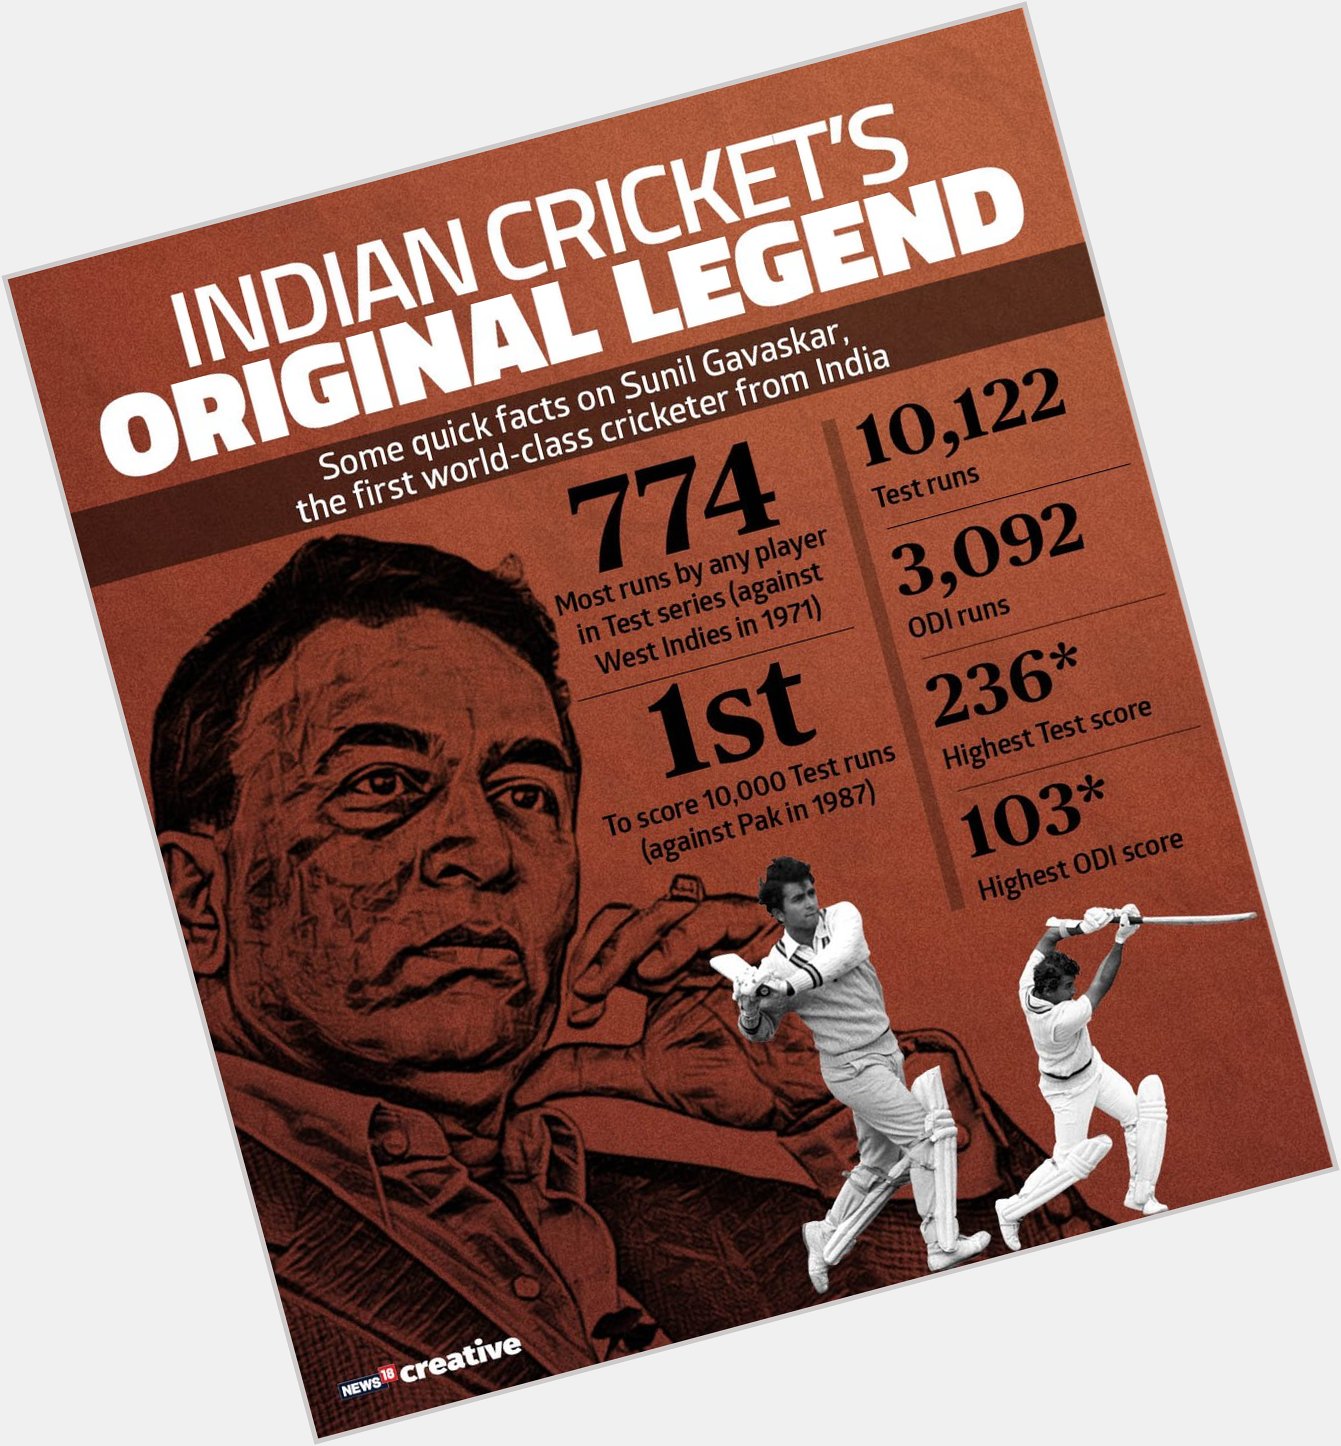 Happy Birthday Sunil Gavaskar, the original legend of Indian cricket 